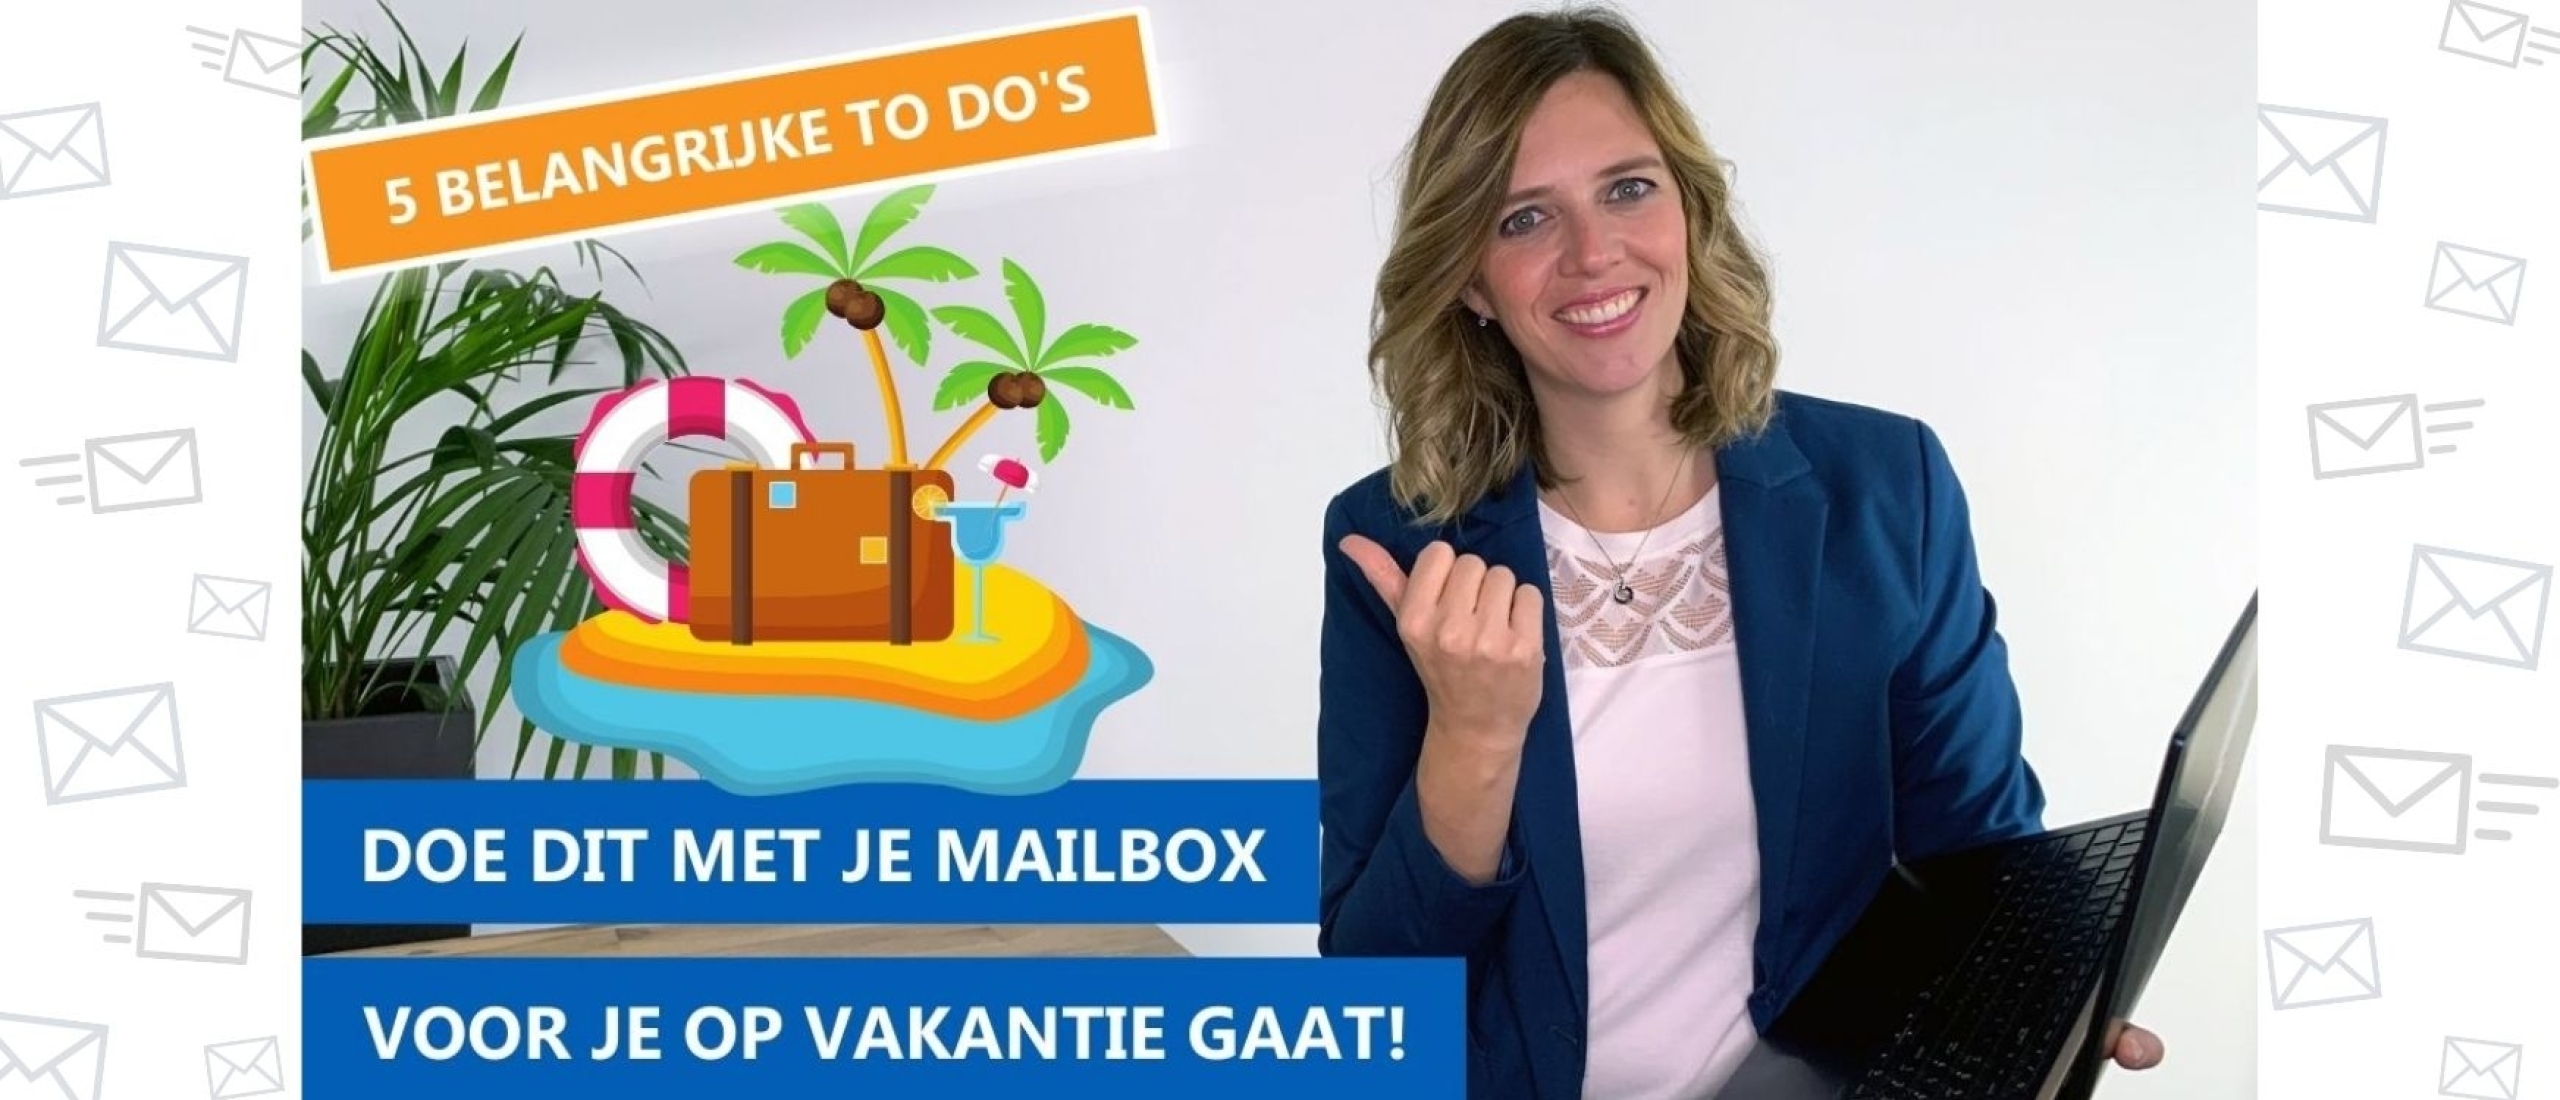 Doe dit met je mailbox vóórdat je op vakantie gaat: 5 tips + bonustip